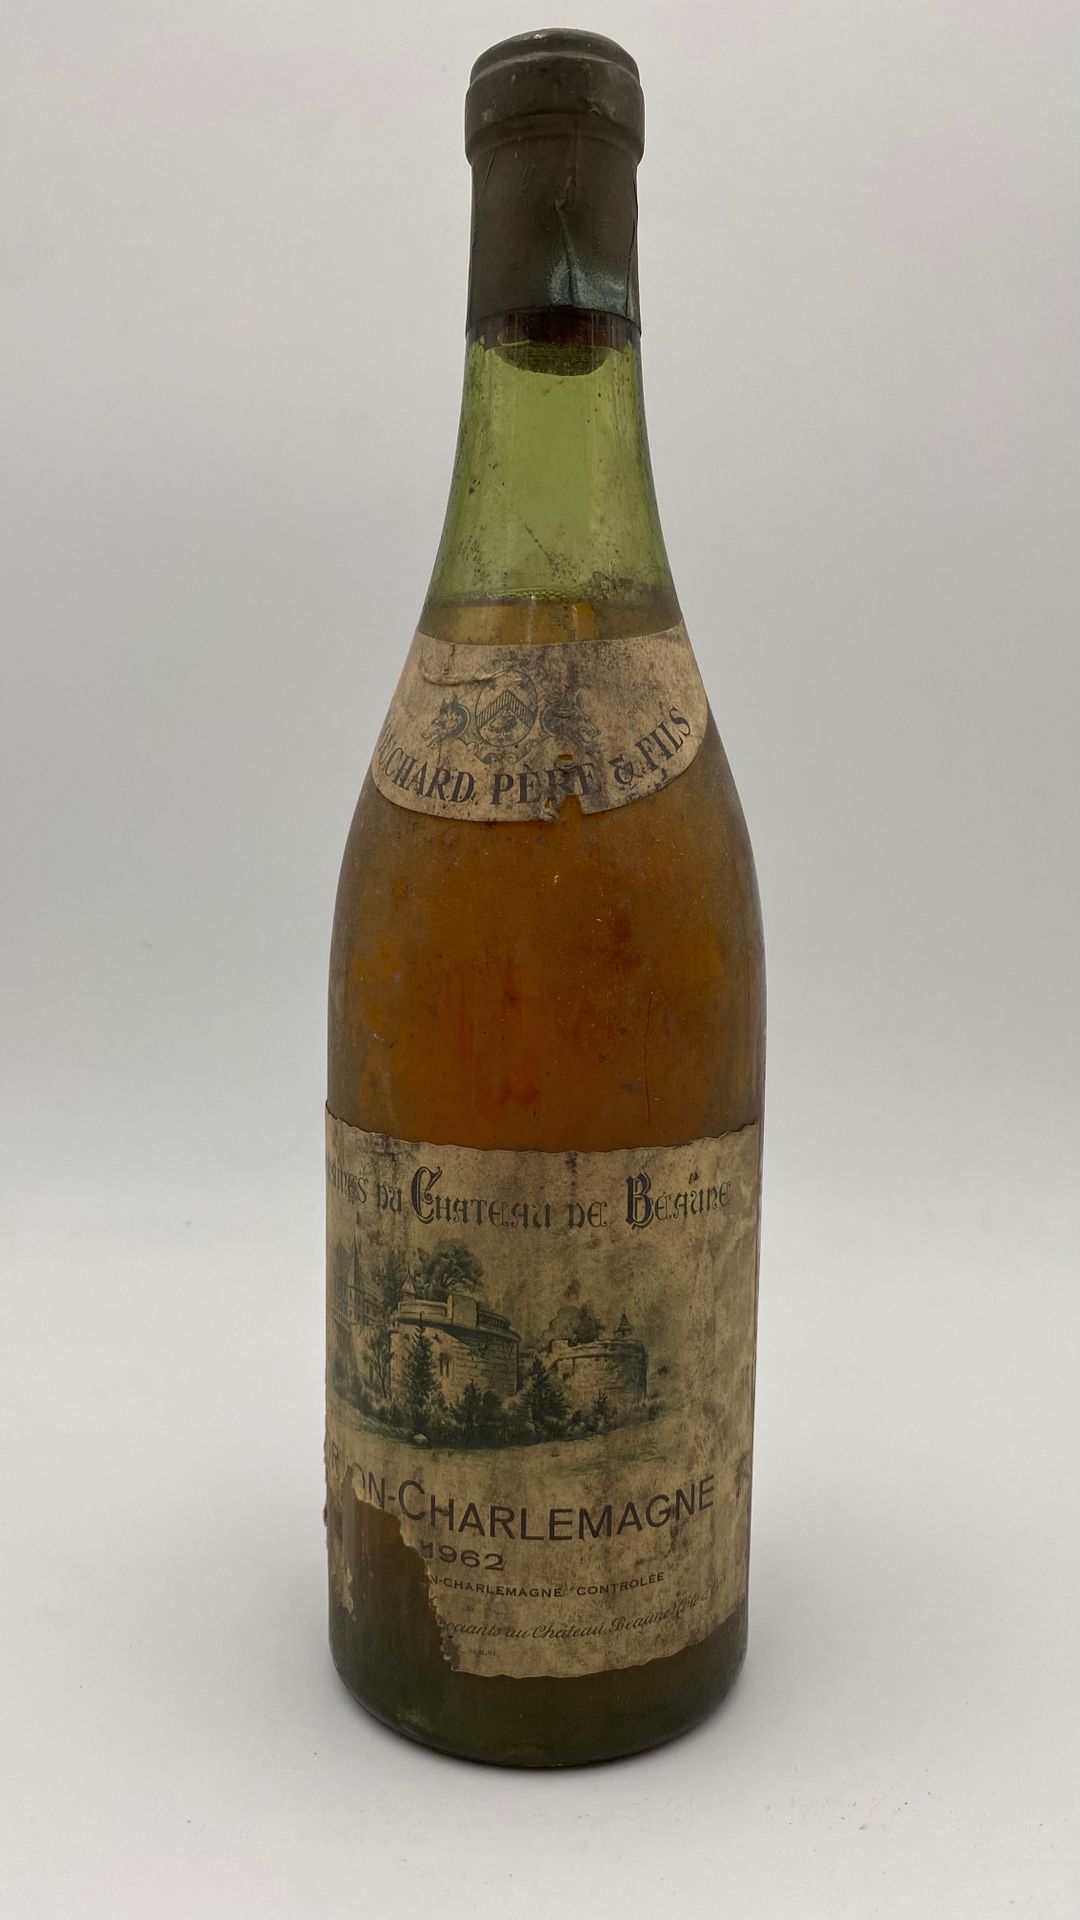 Null 1瓶CORTON CHARLEMAGNE, Bouchard P&F 1962 (ETT, EA, MB, 污损的瓶盖)